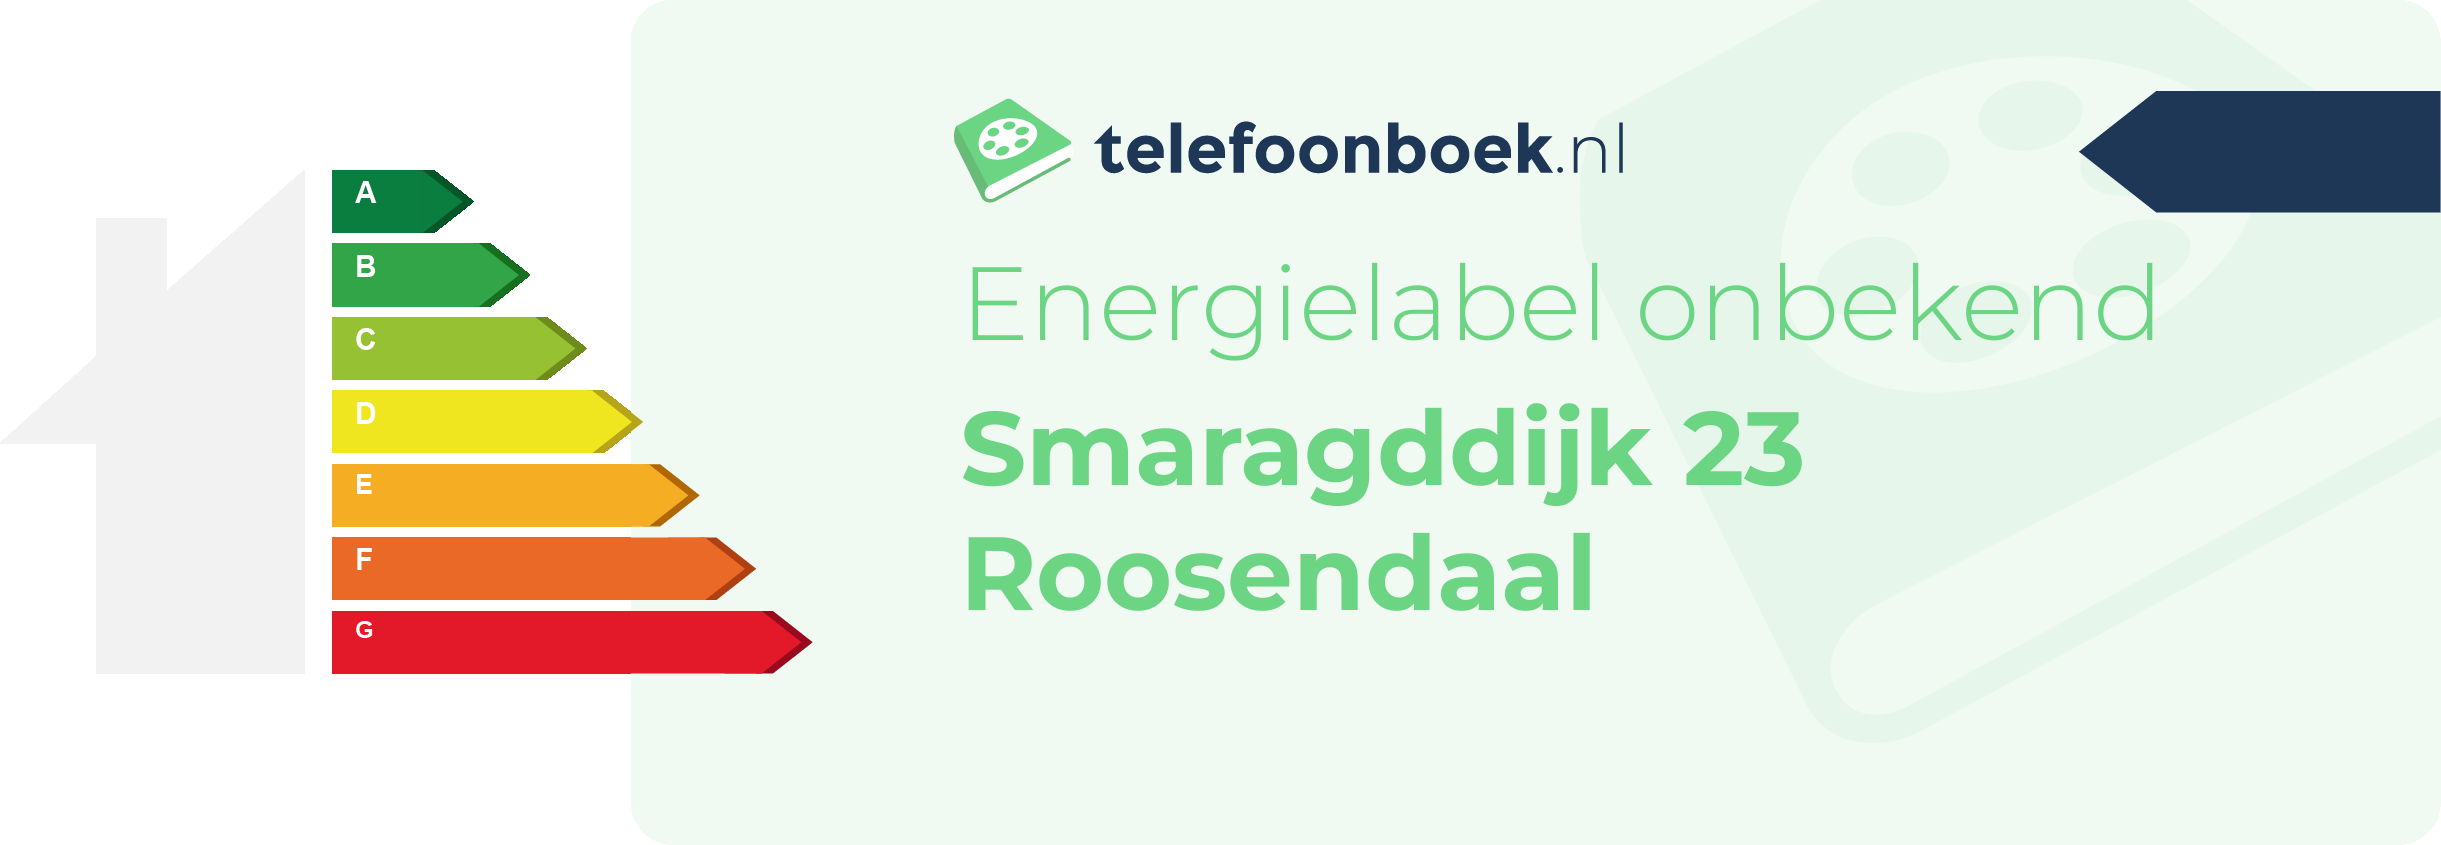 Energielabel Smaragddijk 23 Roosendaal